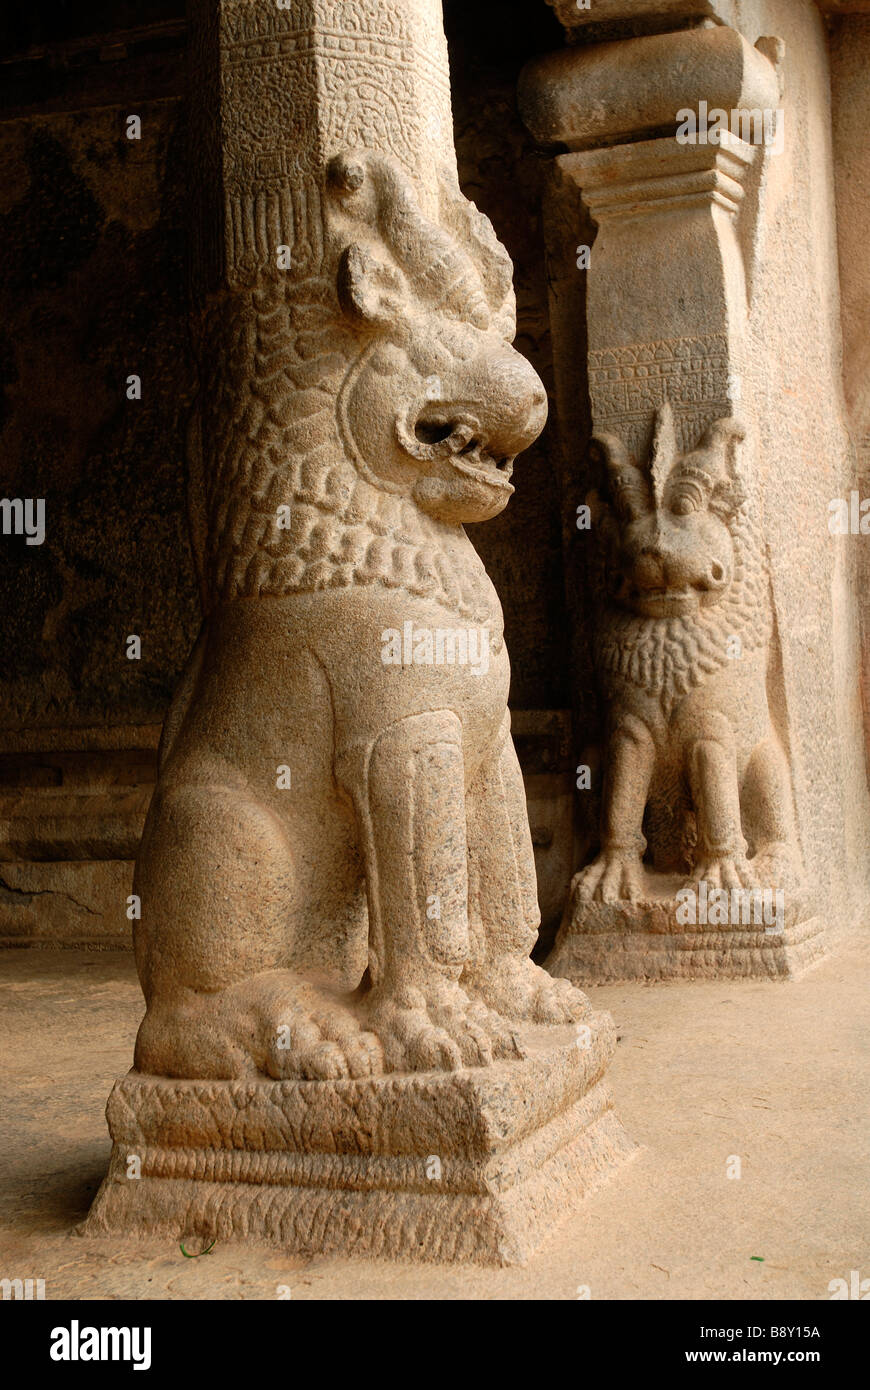 Sculpture de deux lions dans un temple, Ramanuja Mandapa, Mahabalipuram, Tamil Nadu, Inde Banque D'Images